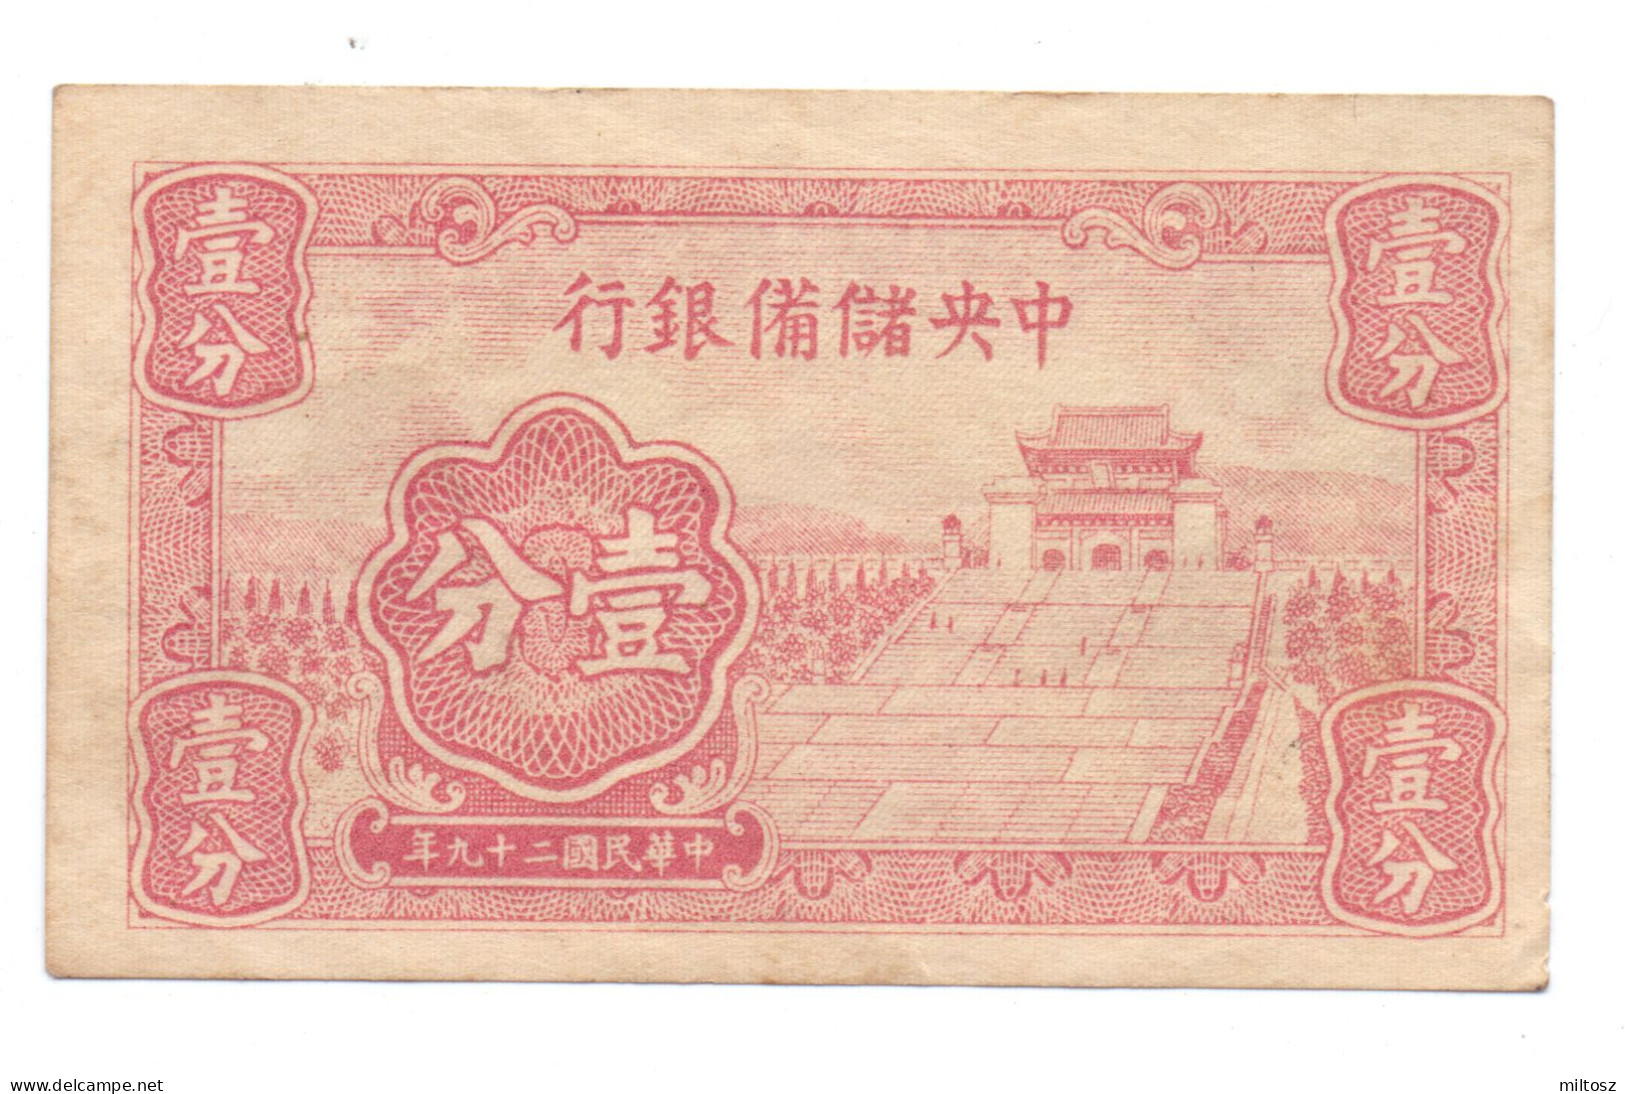 China Puppet States 1 Cent 1940 - Japan